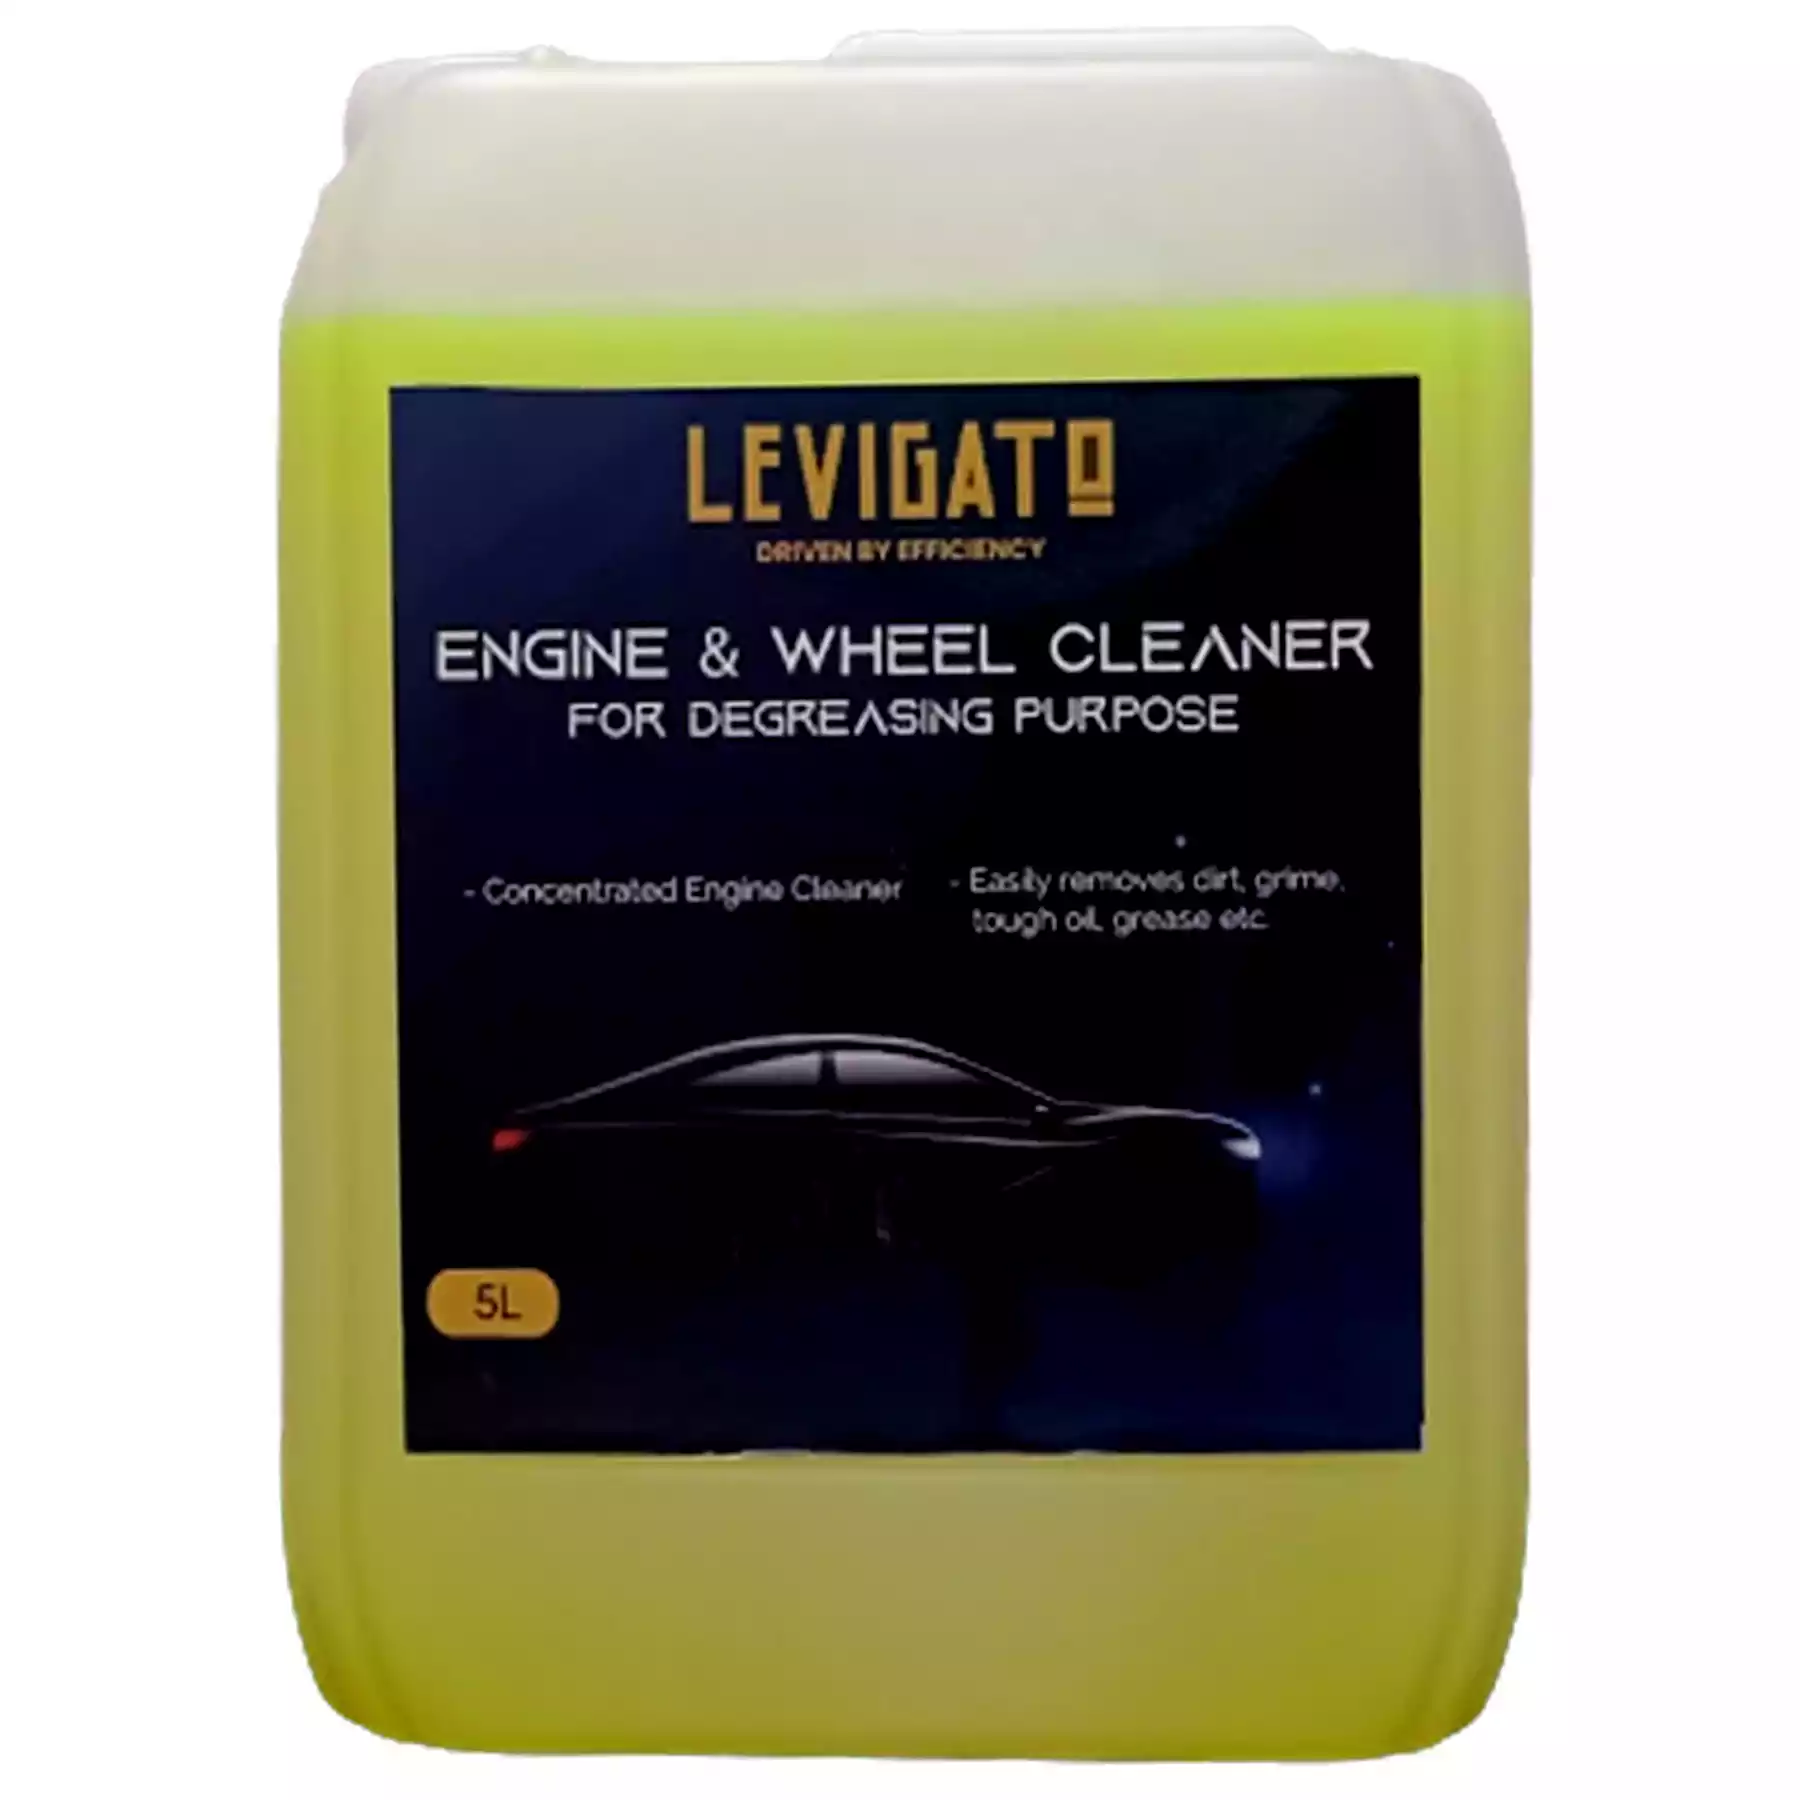 Engine & Wheel Cleaner